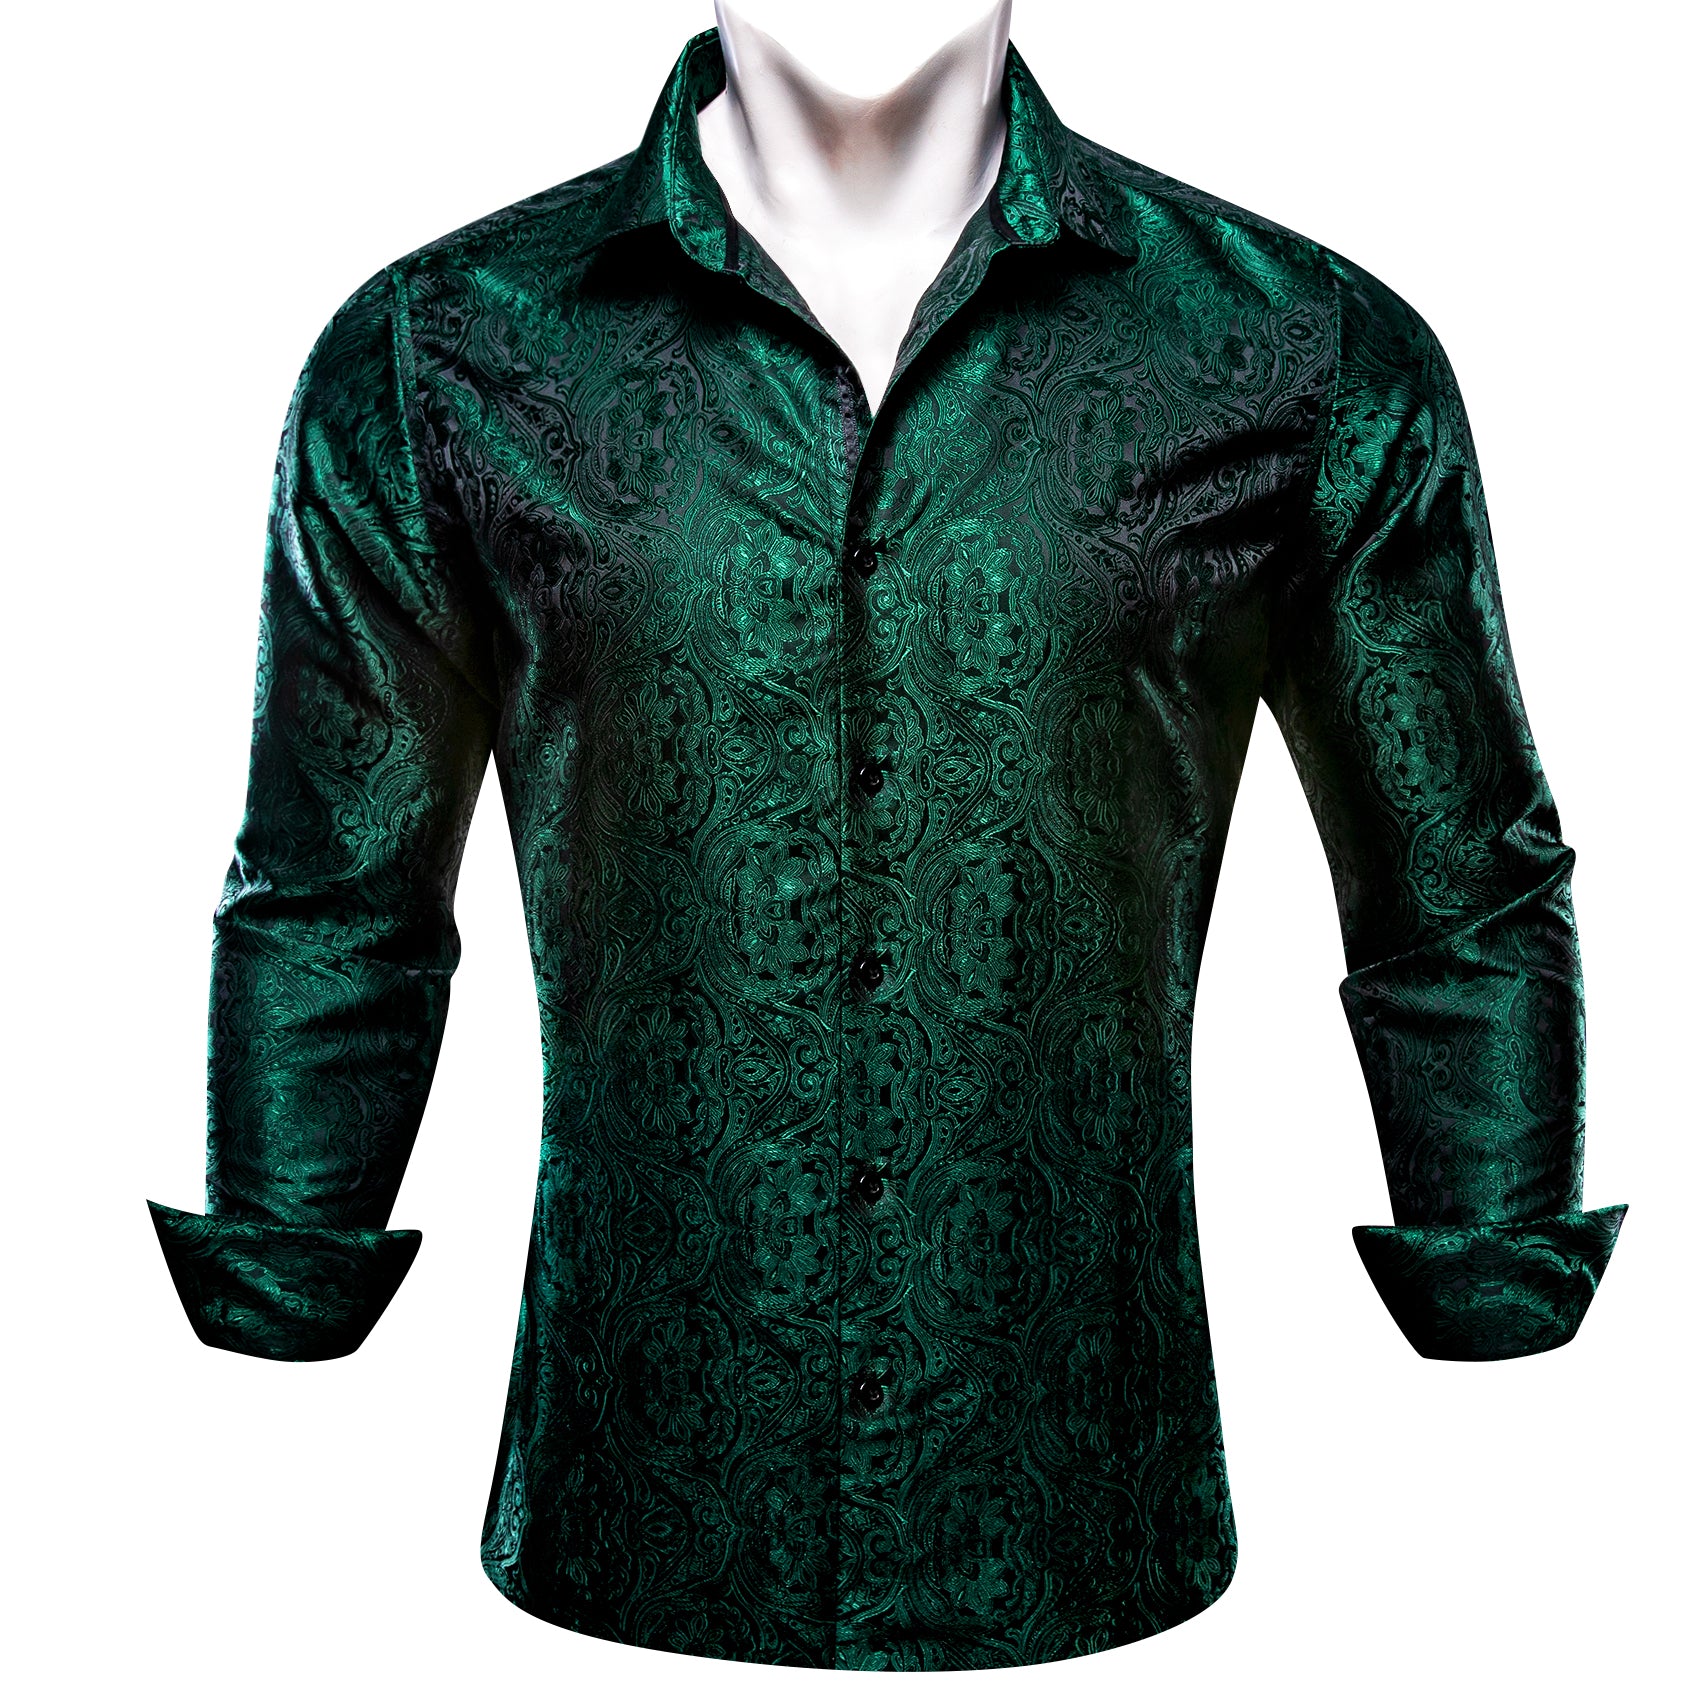 Barry.wang New Black Green Paisley Men's Silk Shirt